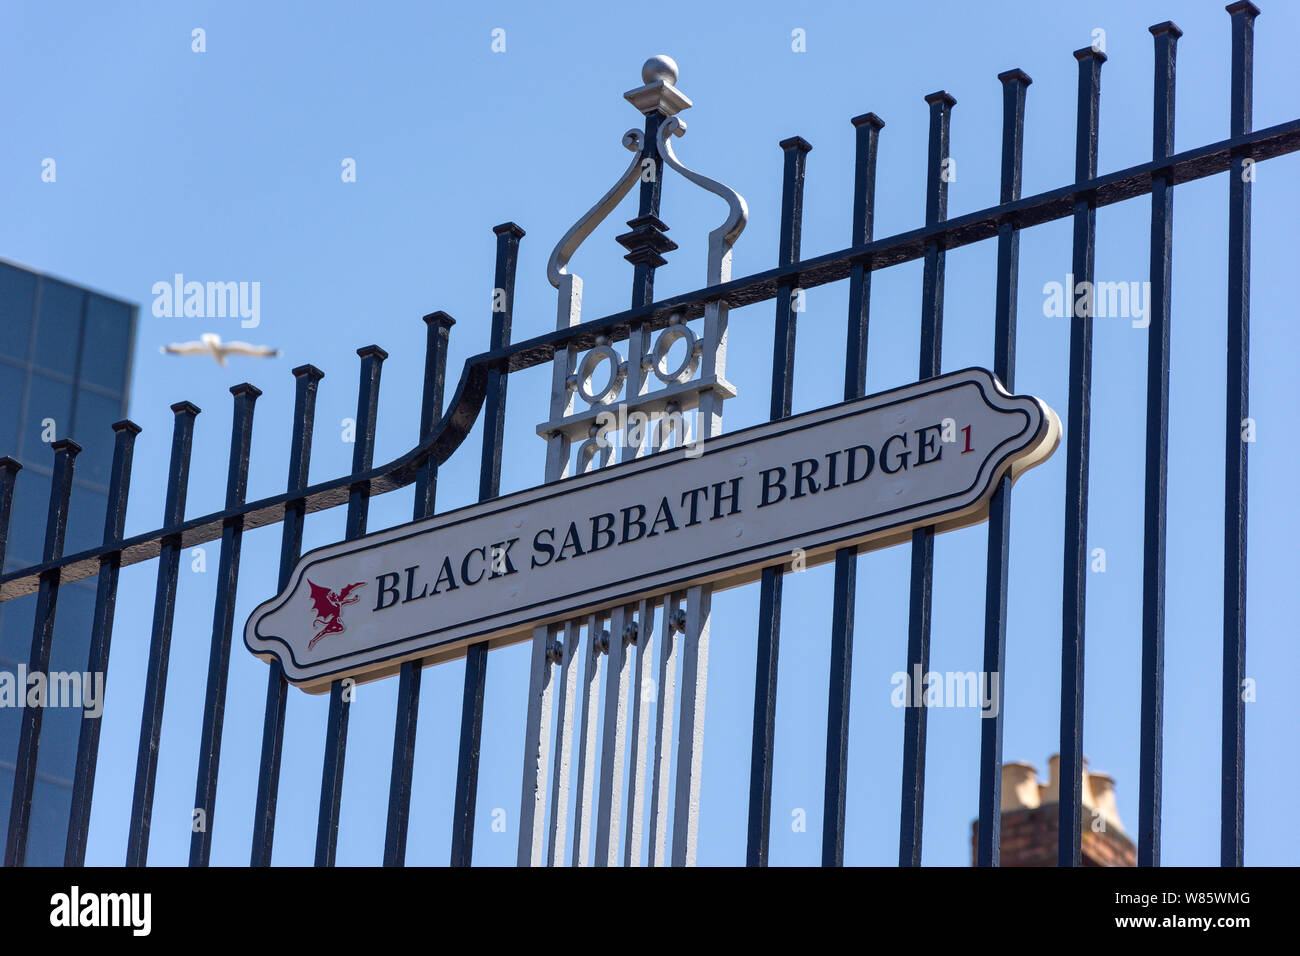 Black Sabbath Bridge sign by The Worcester and Birmingham Canal, Gas Street Basin, Birmingham, West Midlands, England, United Kingdom Stock Photo